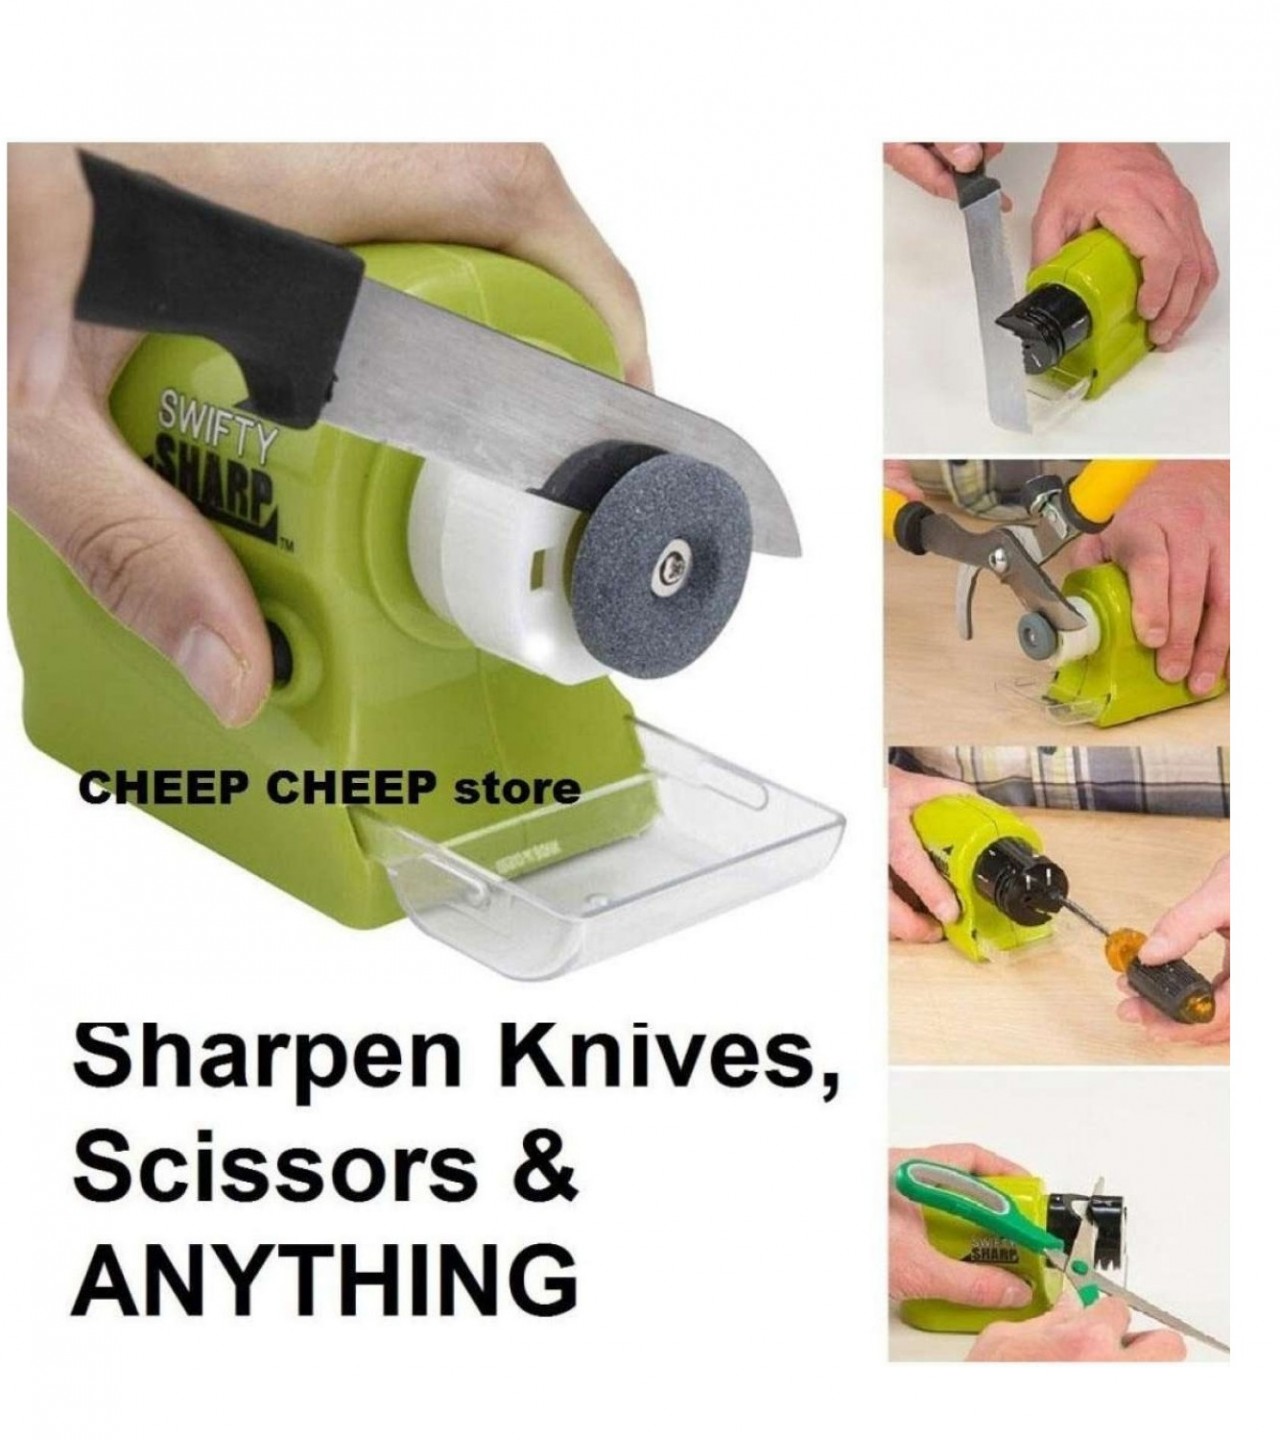 100% Original Swifty Sharp Cordless Motorized Knife Sharpner sliming